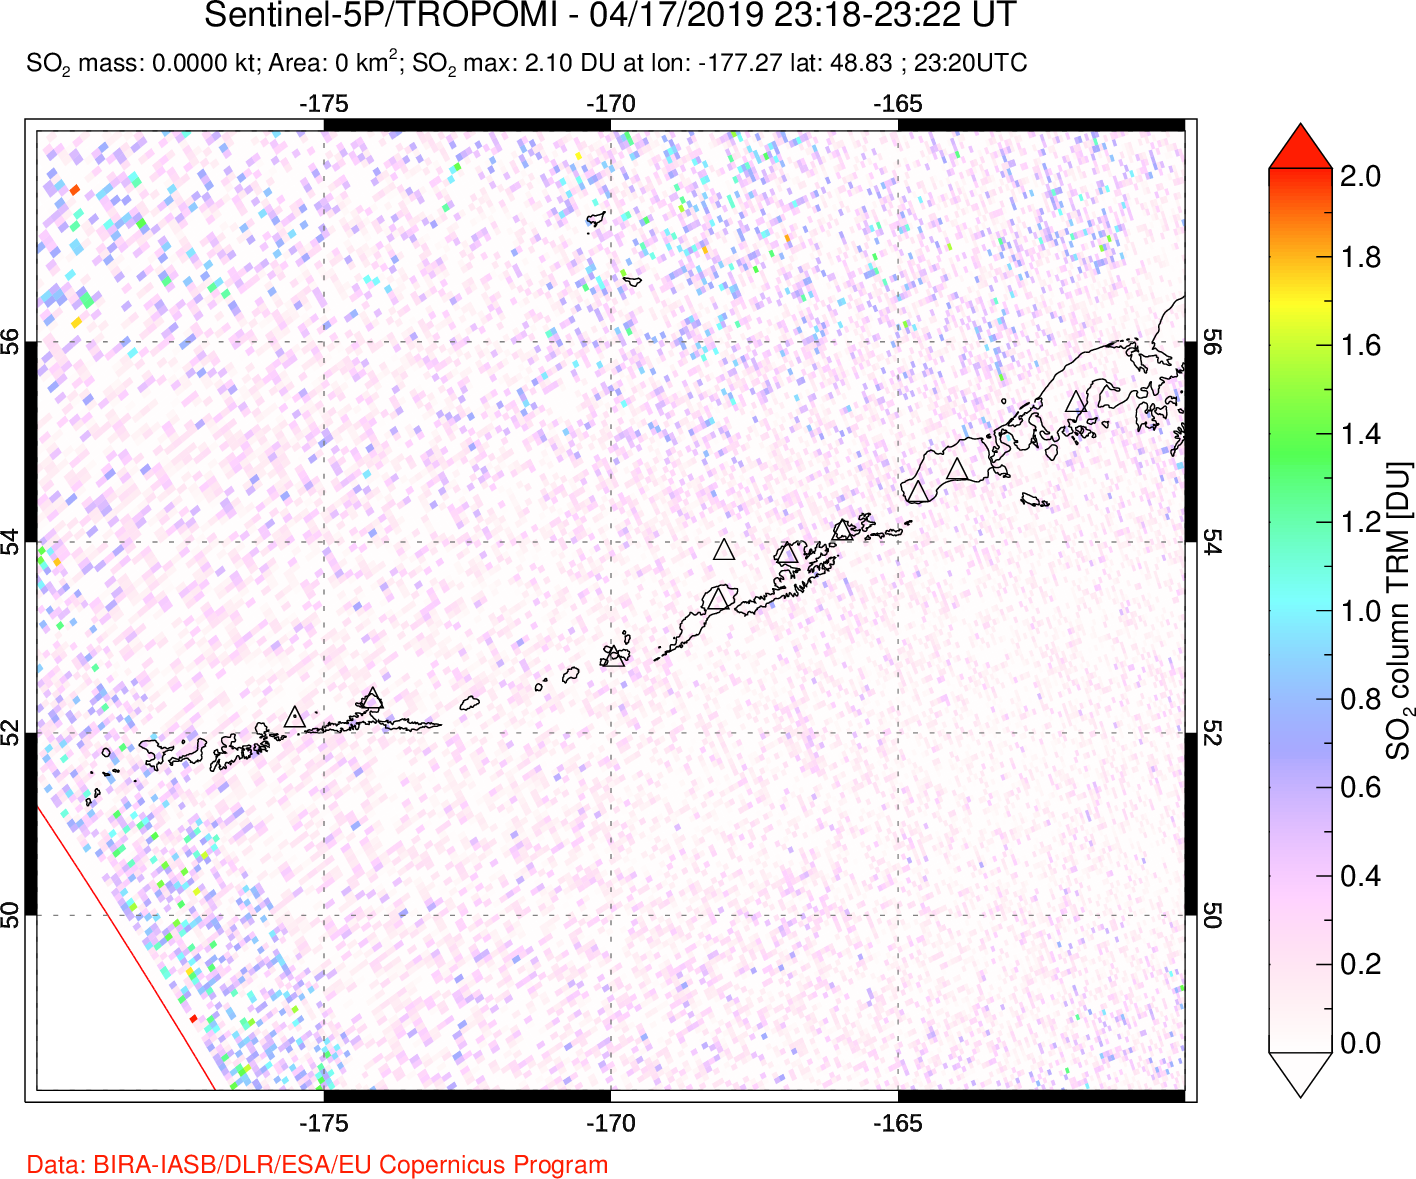 A sulfur dioxide image over Aleutian Islands, Alaska, USA on Apr 17, 2019.